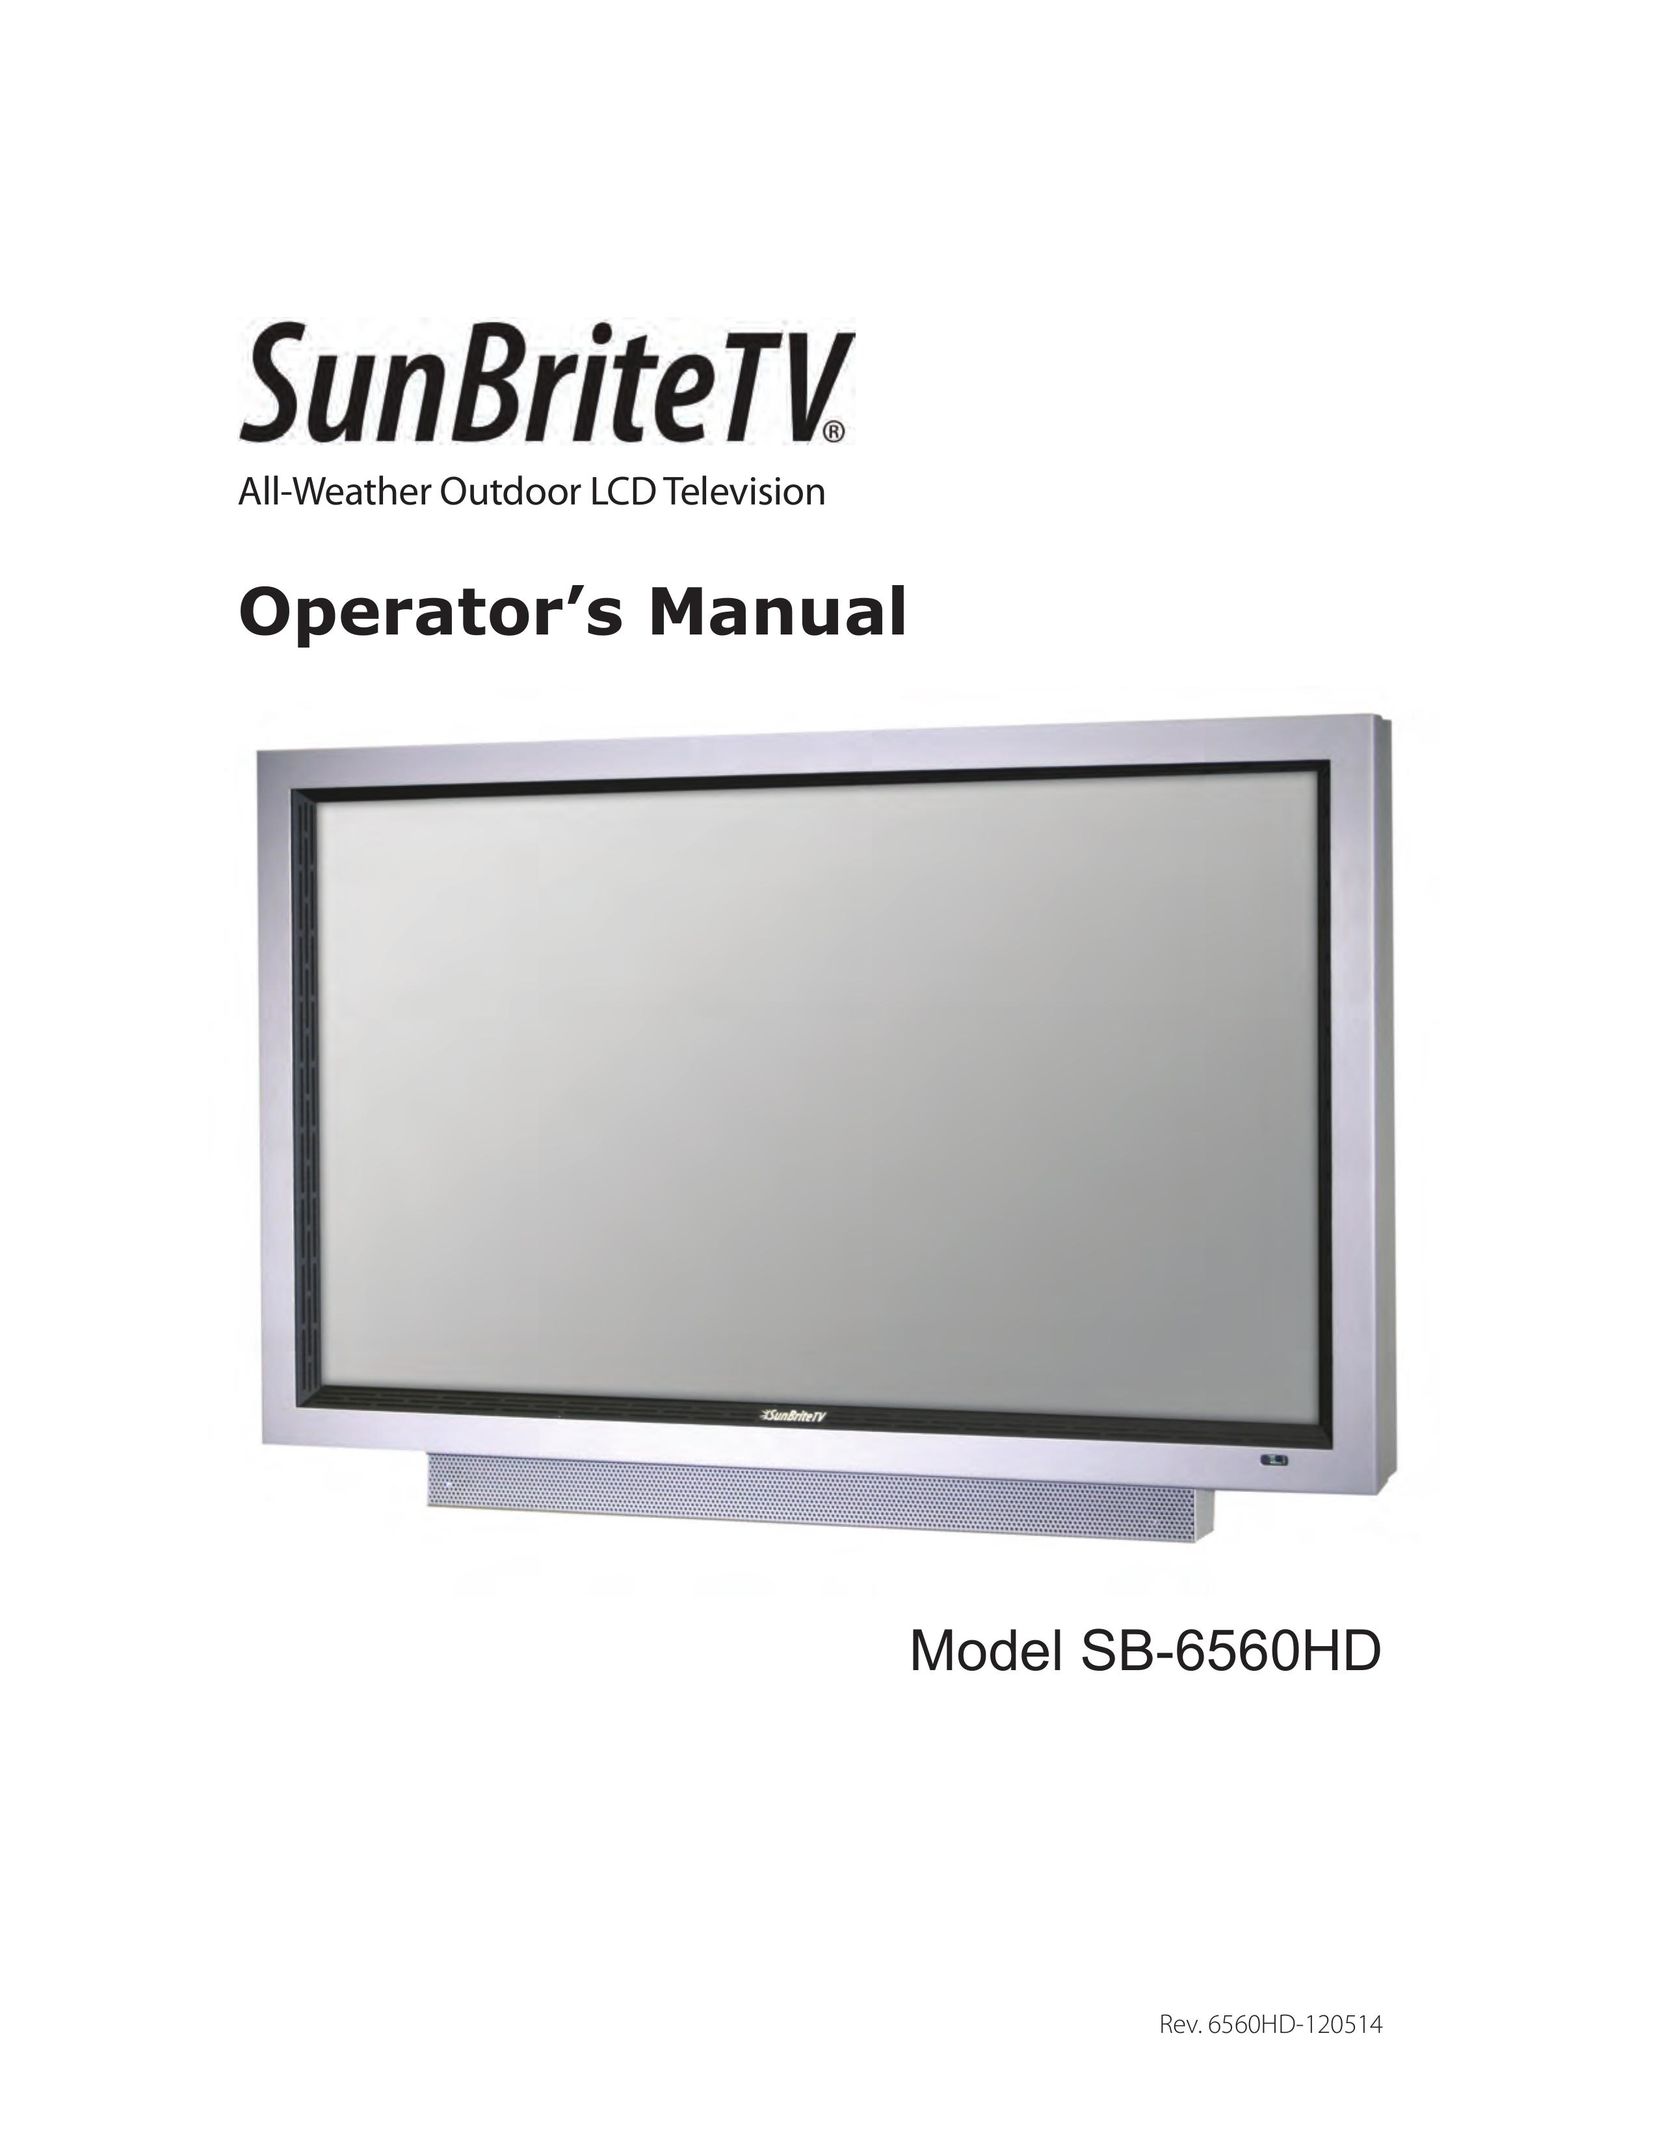 SunBriteTV SB-6560HD-WH Flat Panel Television User Manual